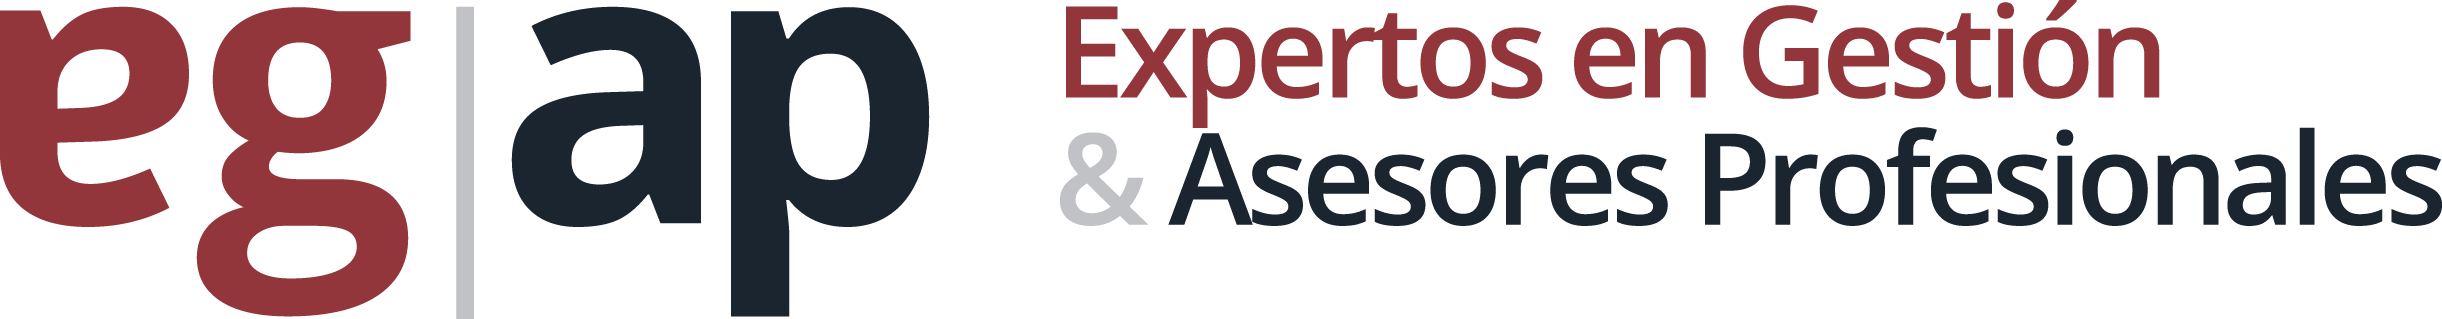 Logo Egap Asesores